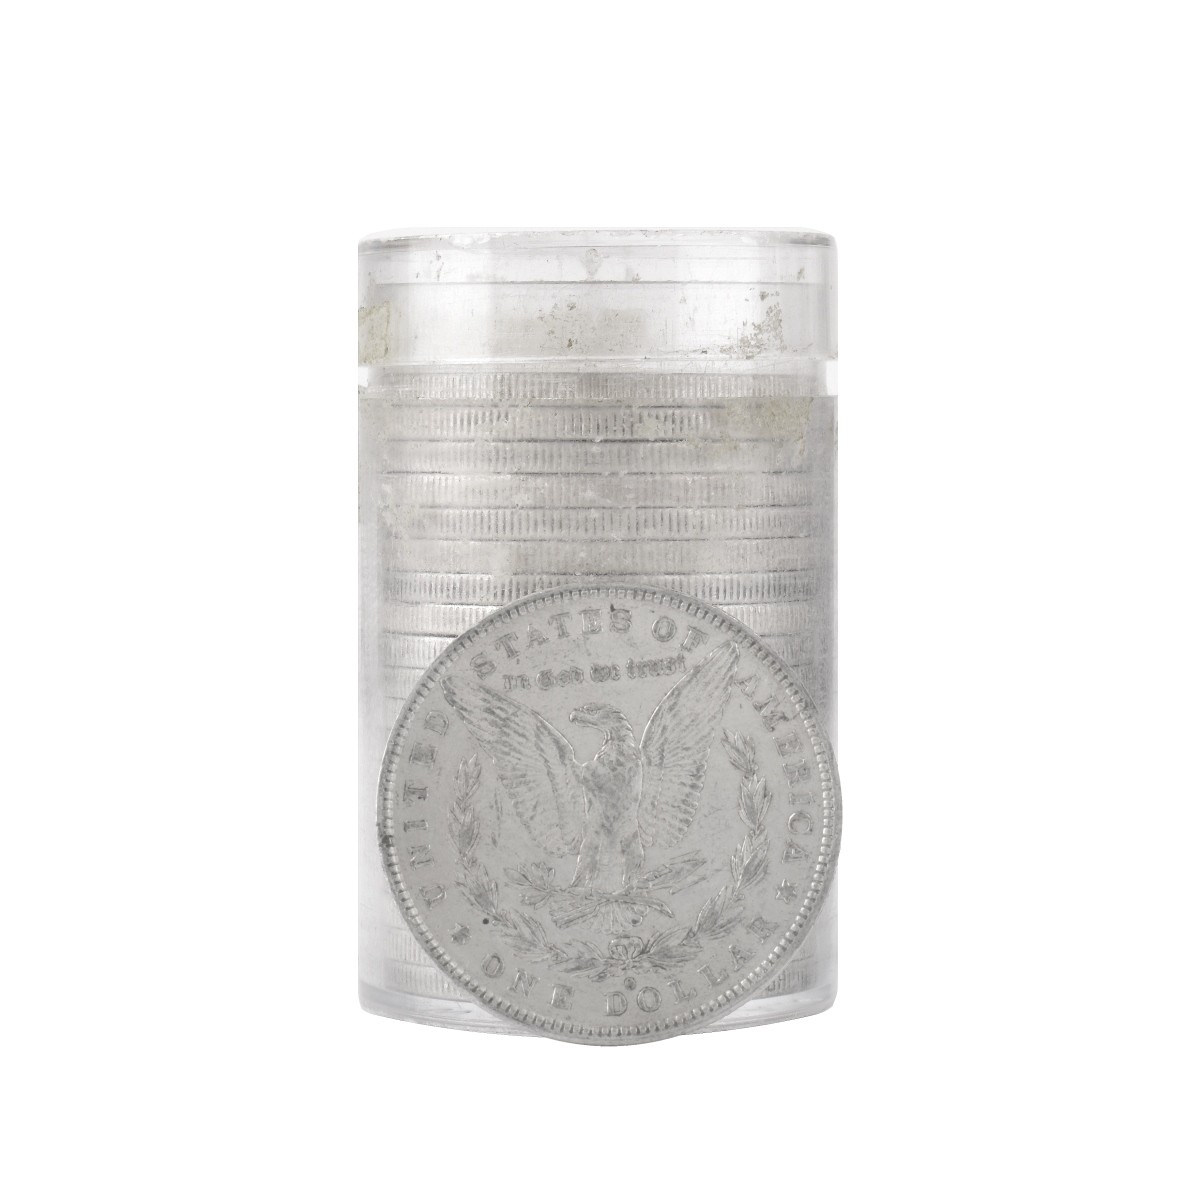 US Silver Morgan Dollars